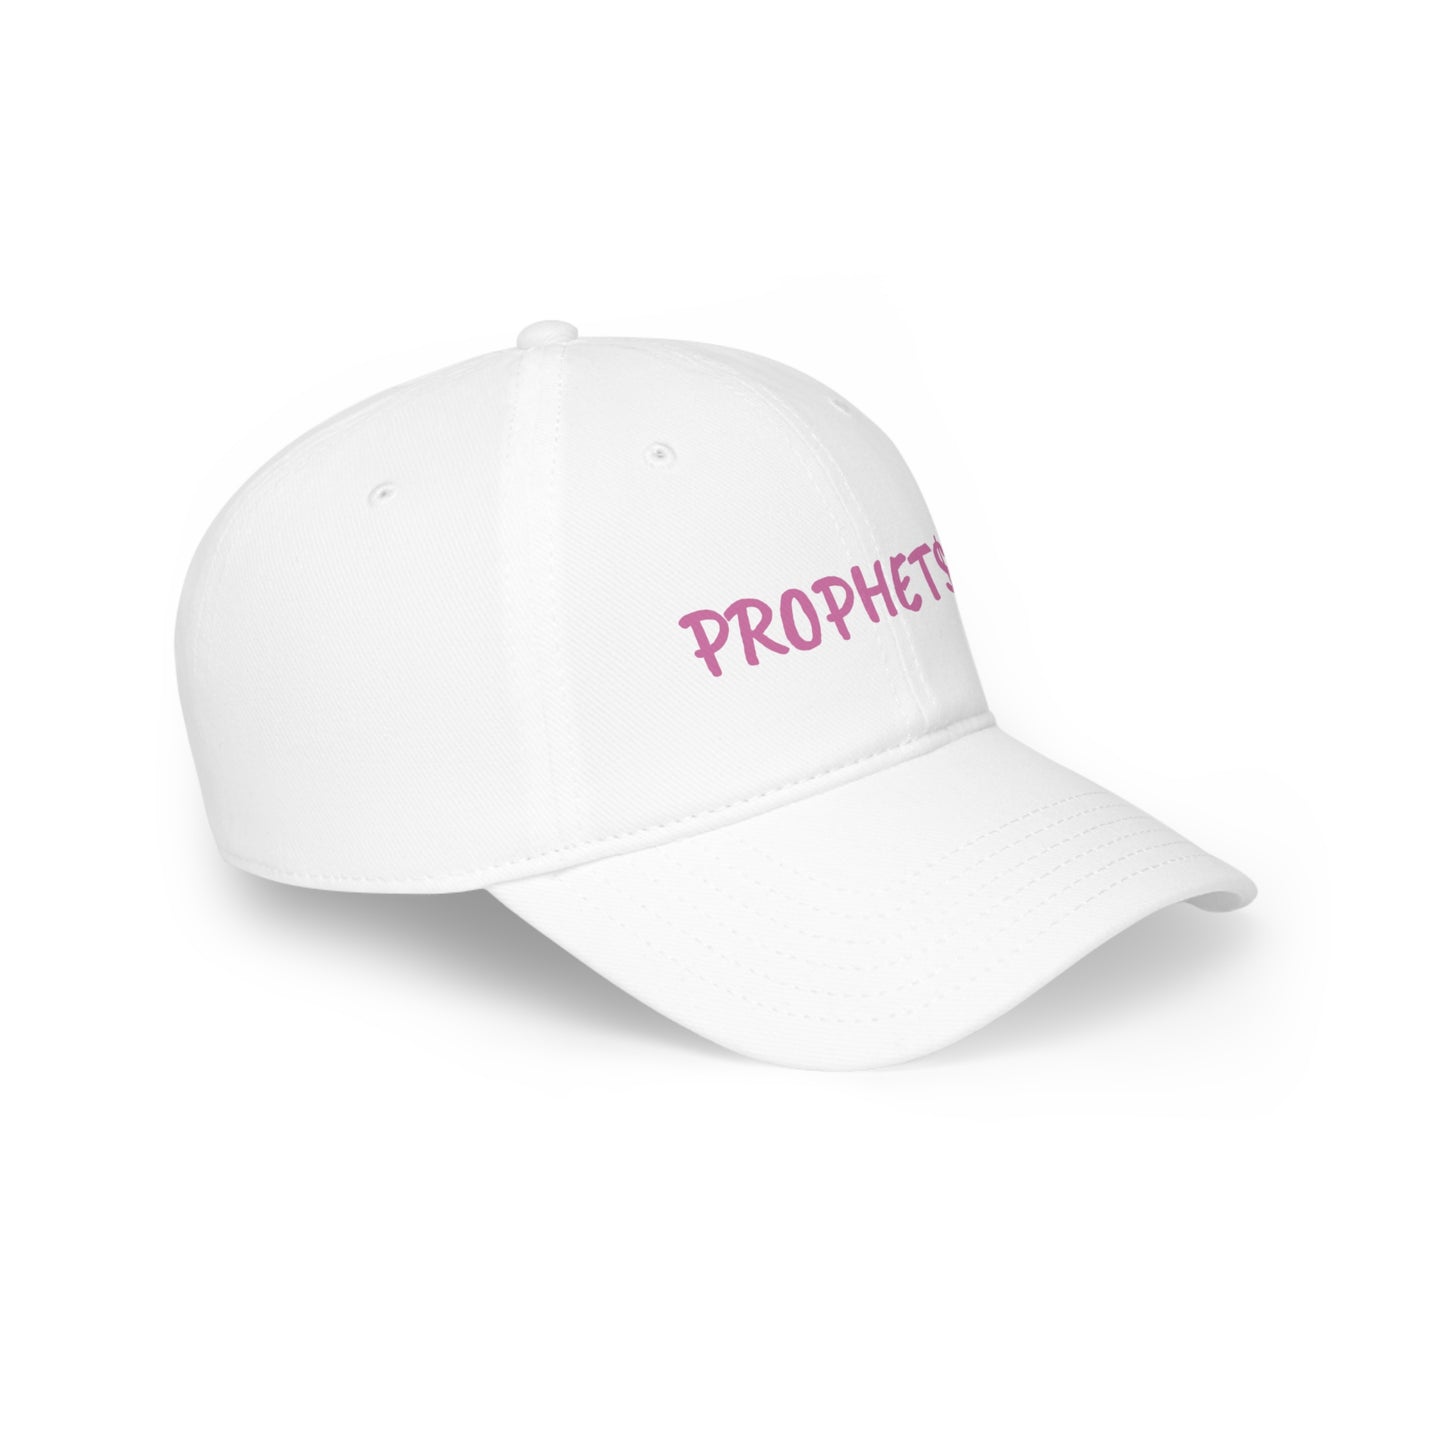 PROPHET$$$ Baseball Cap